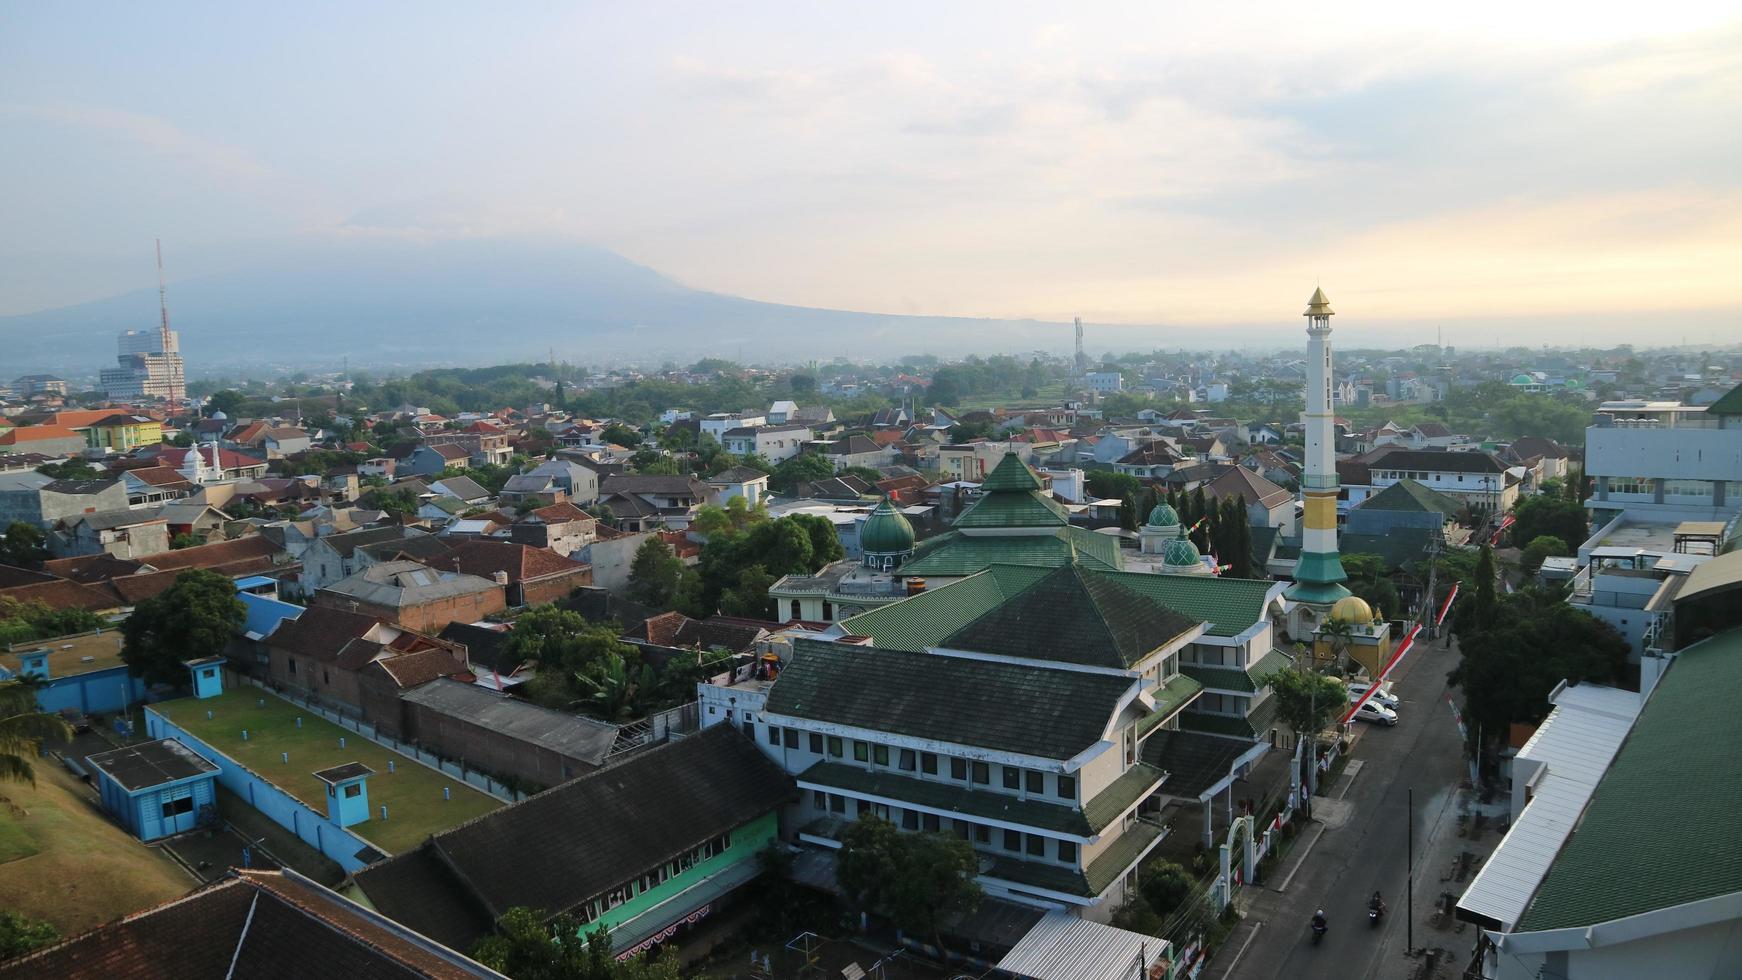 Morgenstimmung in der Stadt Malang foto